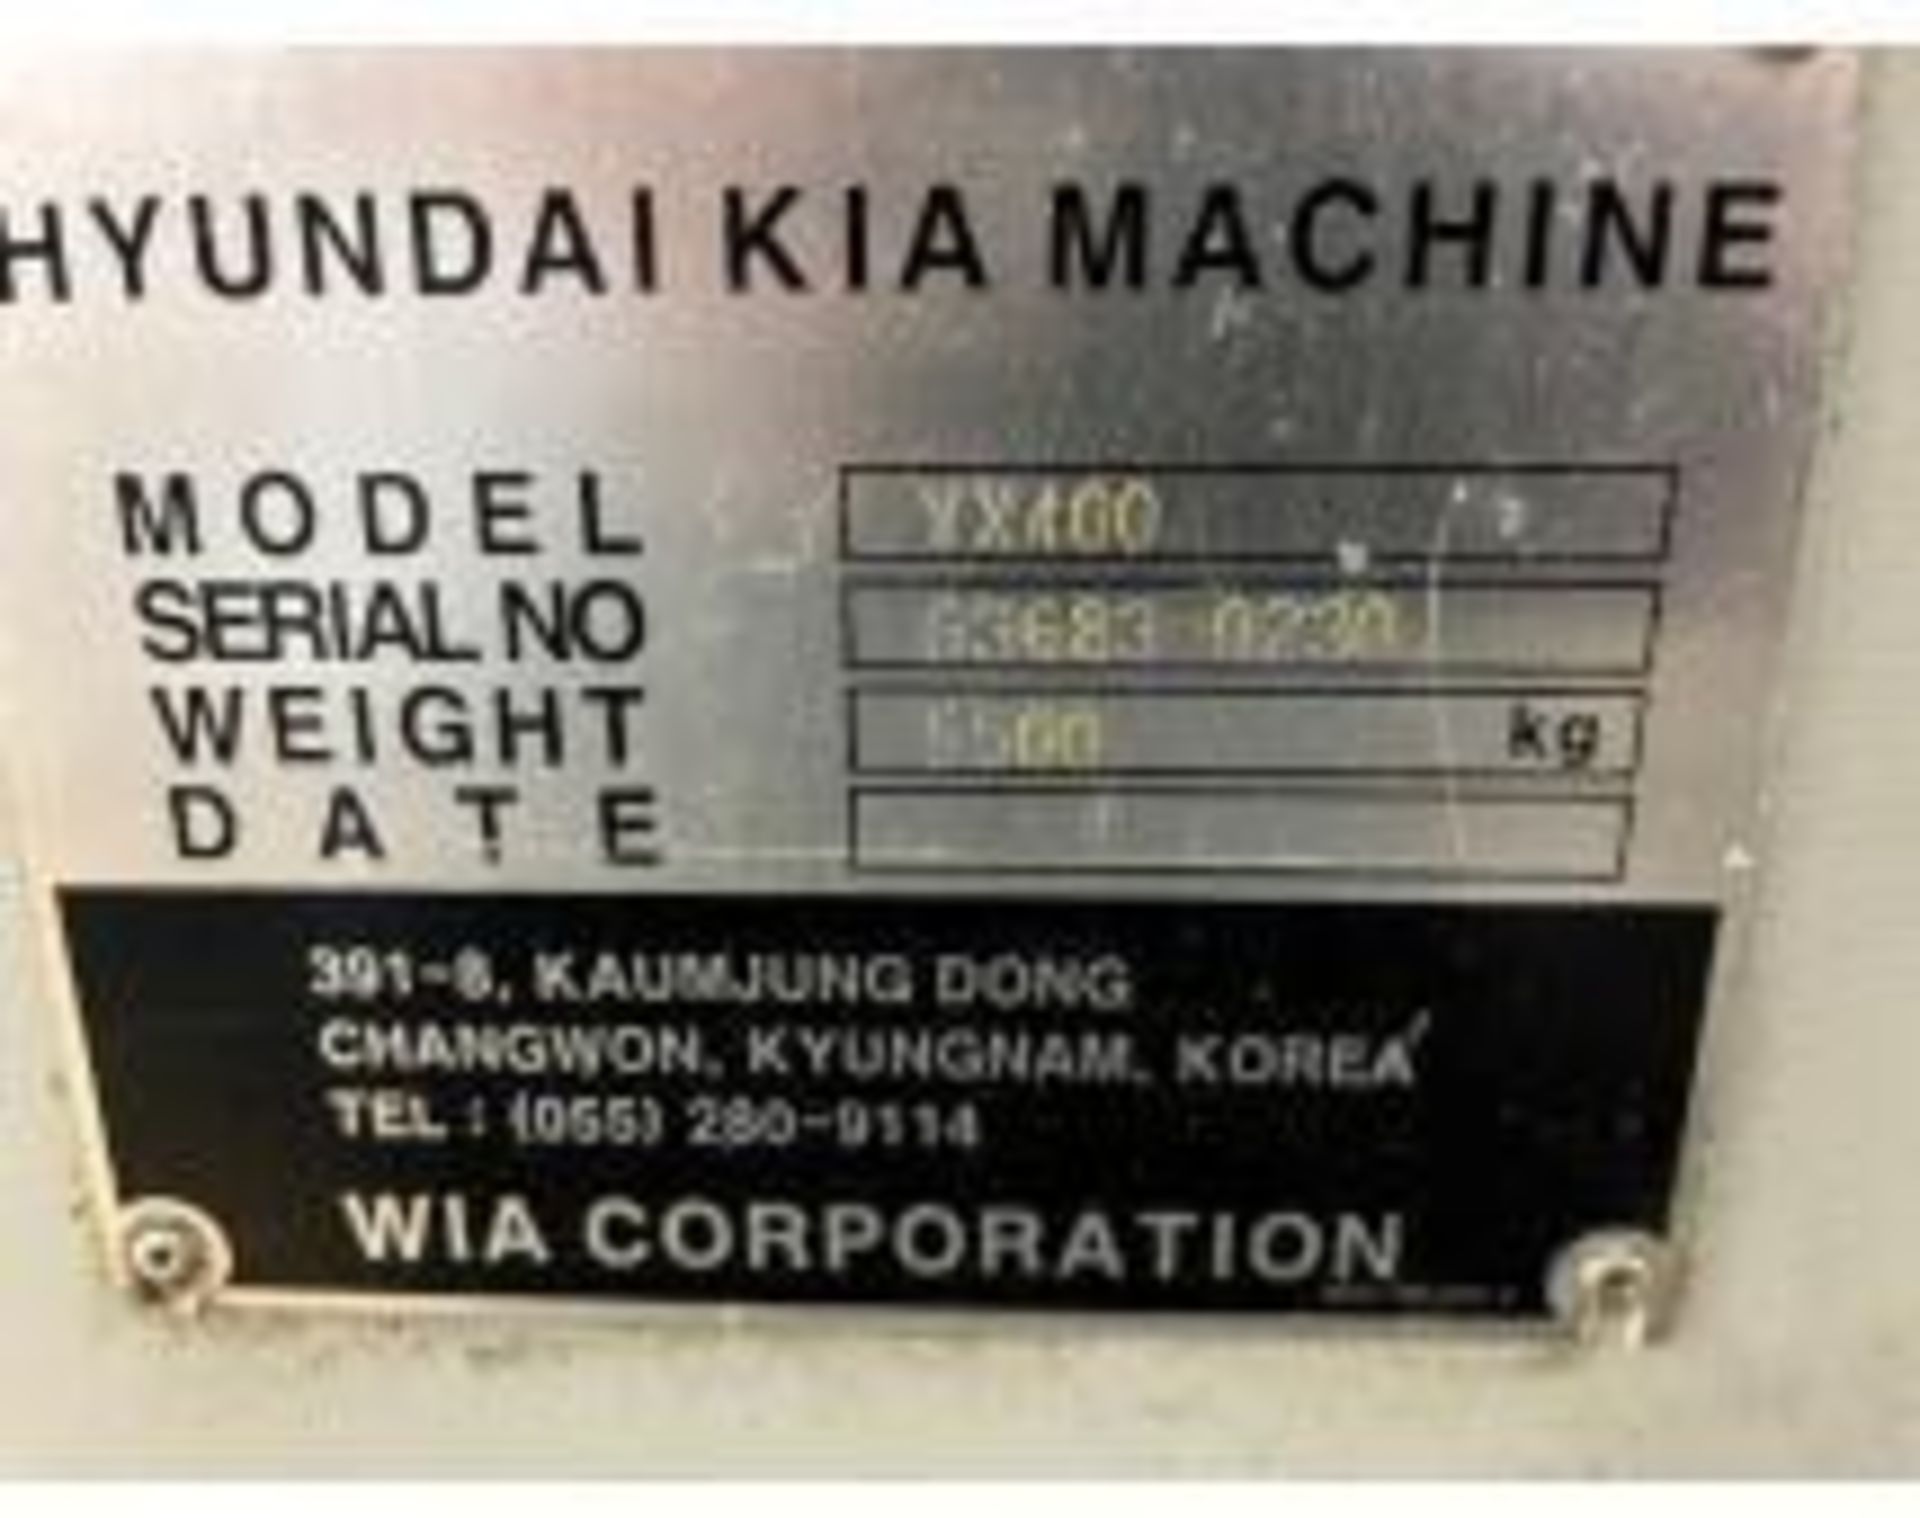 Hyundai-Kia Model VX-400 Vertical Machining Center - Image 11 of 11